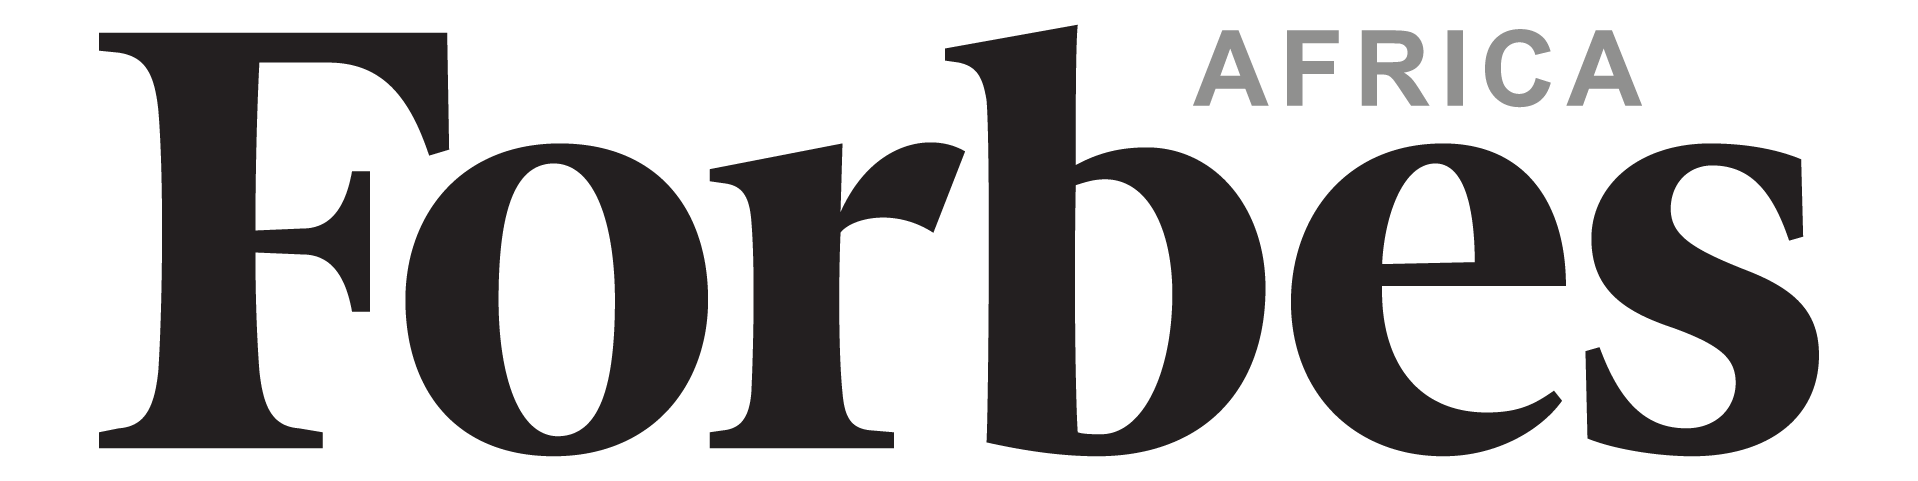 Forbes África - Medios - Editores